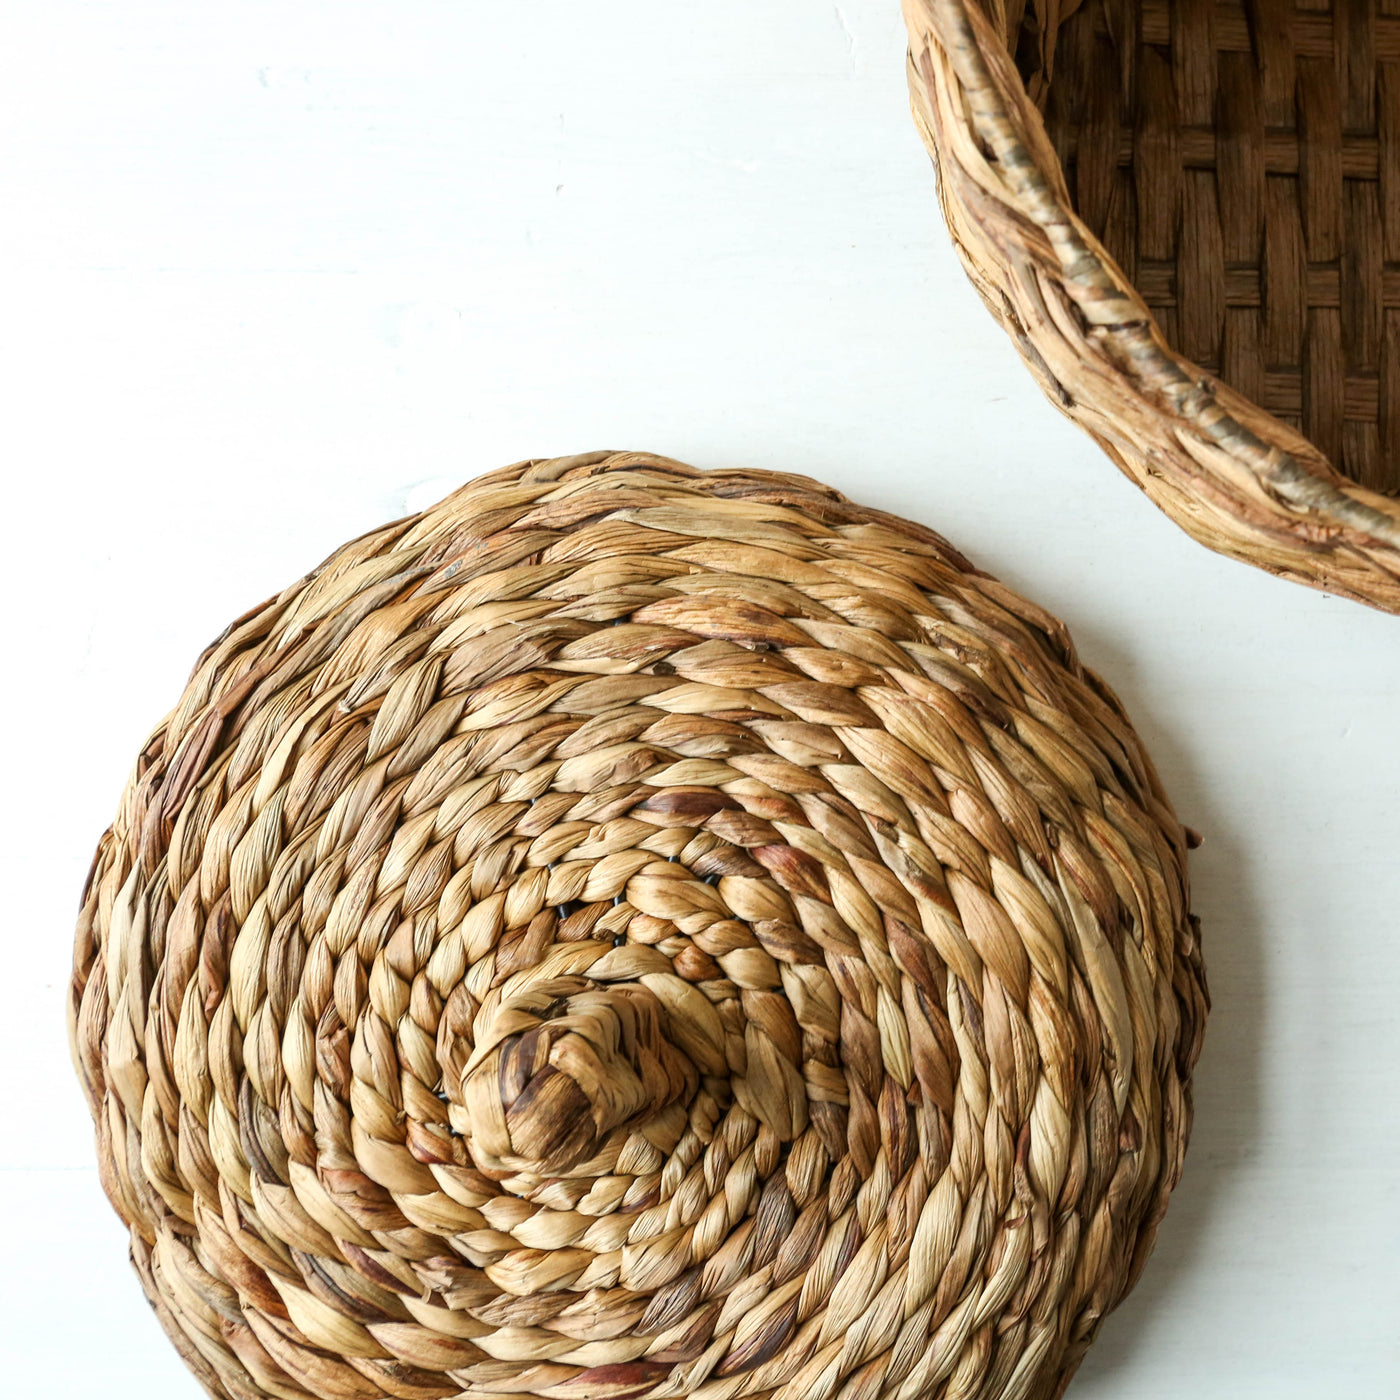 Aske Seagrass Baskets